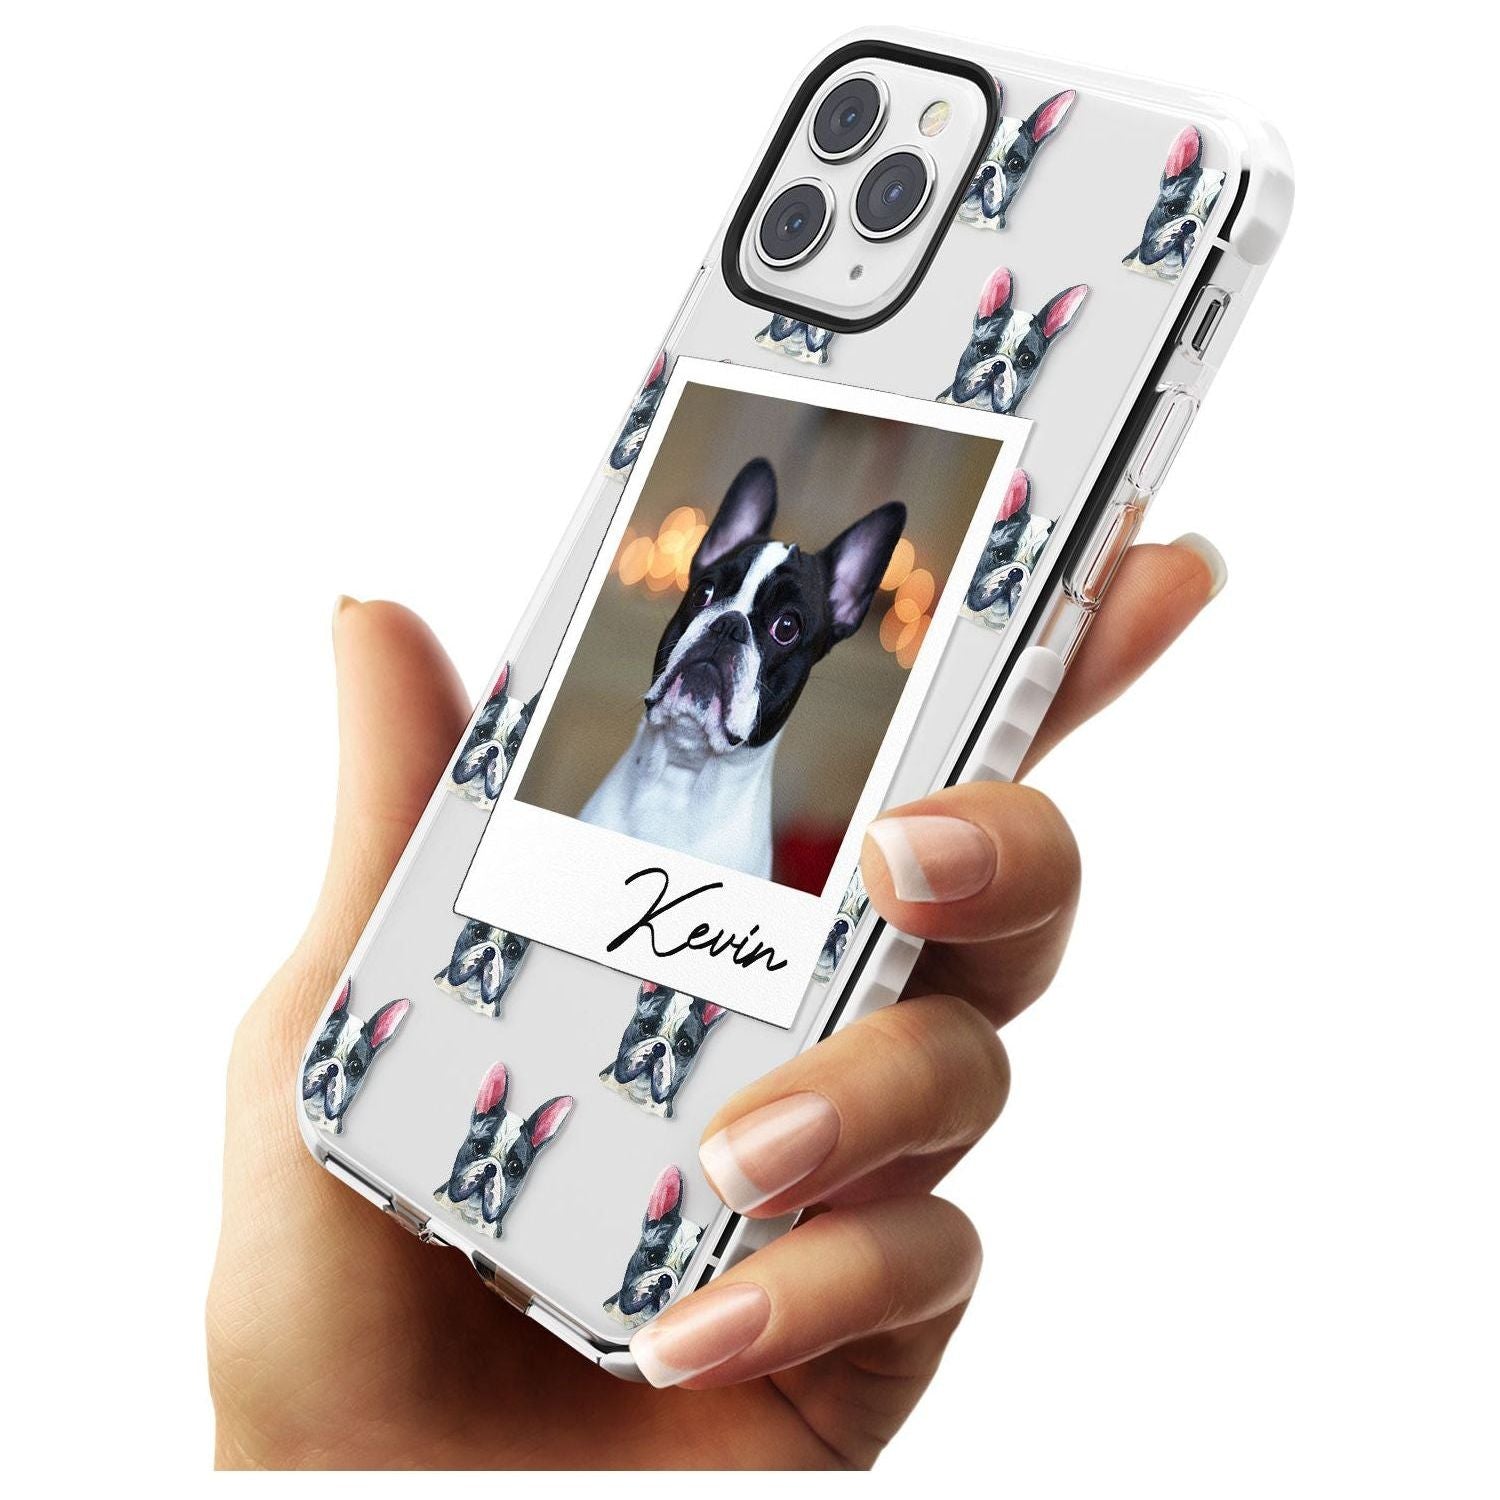 French Bulldog, Black & White - Custom Dog Photo Slim TPU Phone Case for iPhone 11 Pro Max